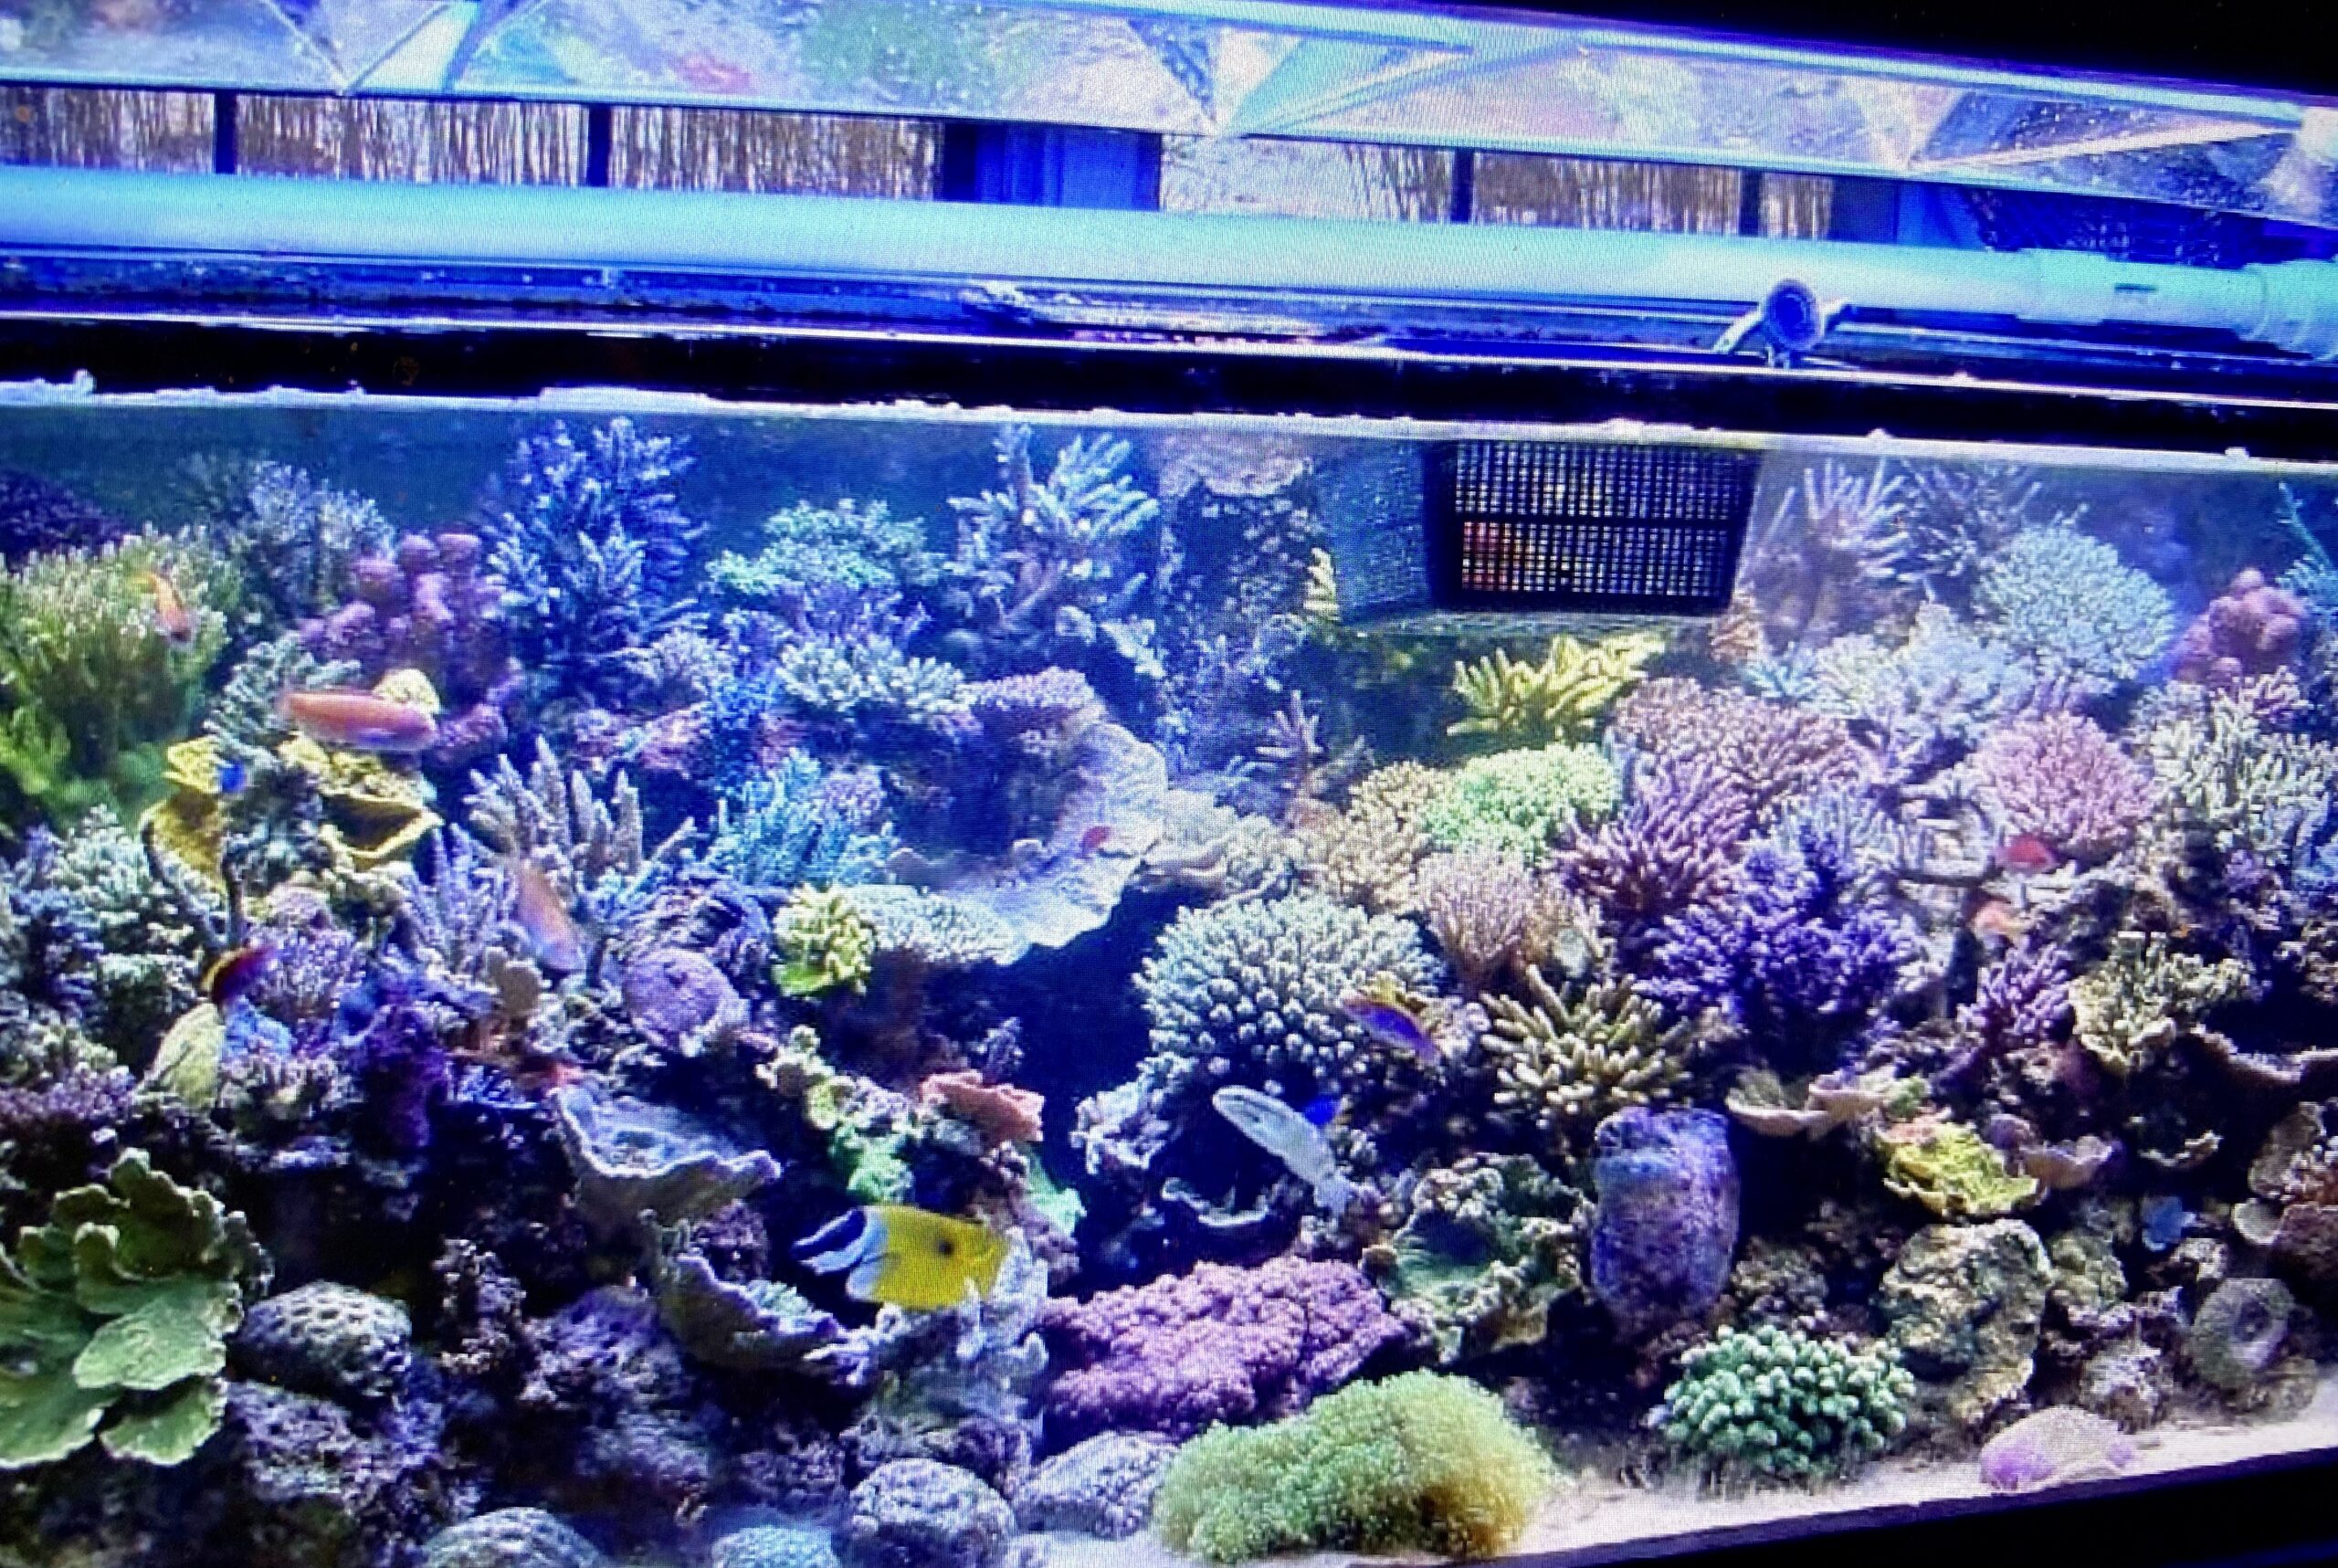 How to Aquascape a Reef Aquarium, Reef Builders